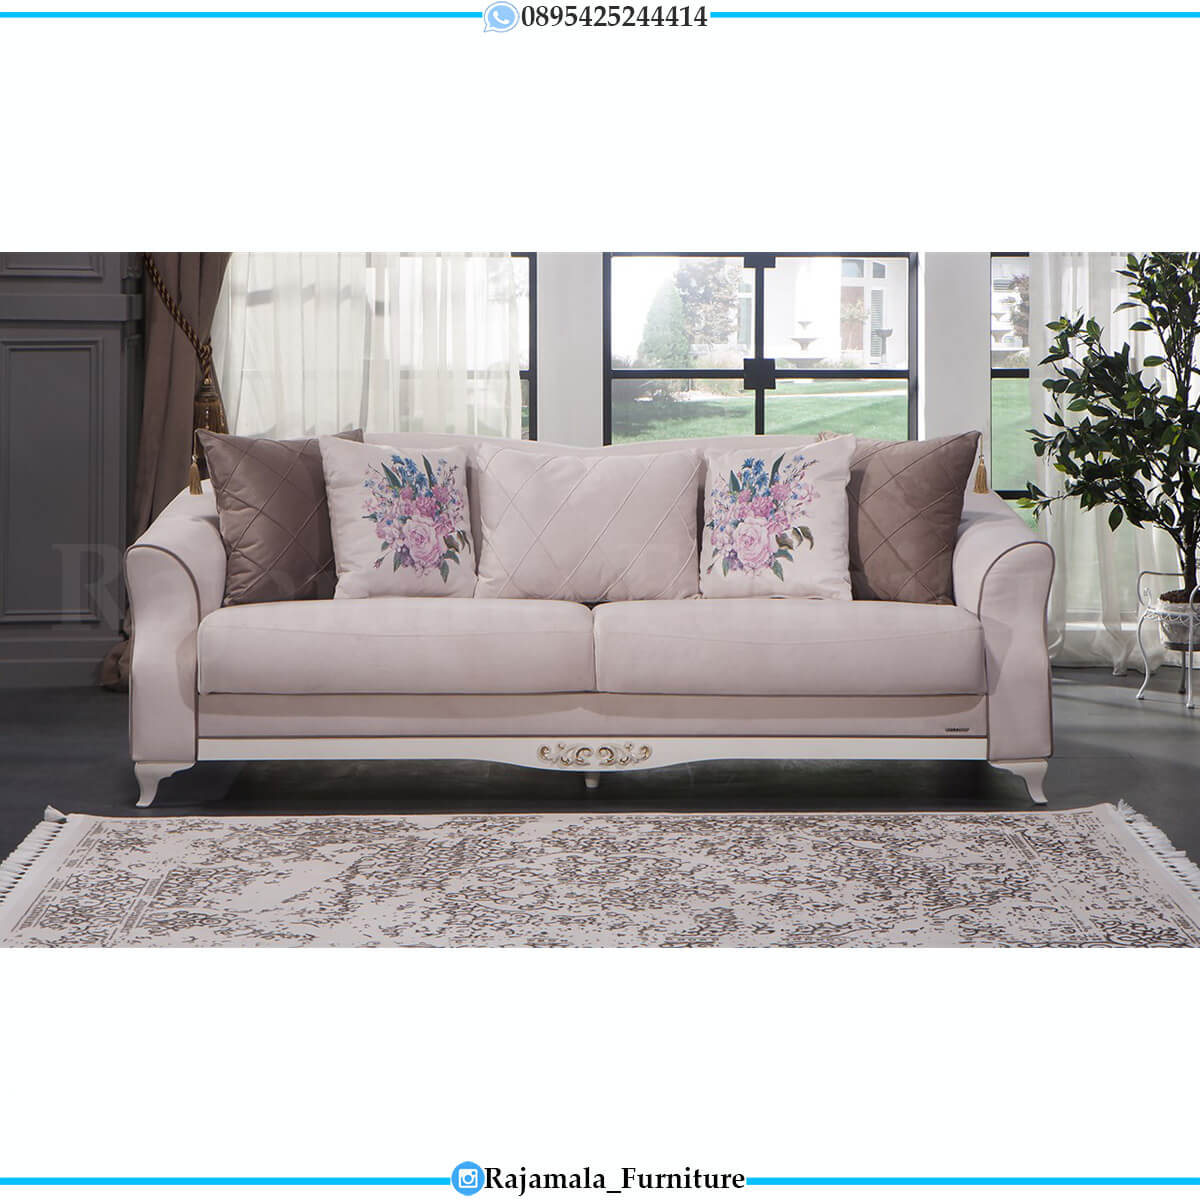 Sofa Minimalis Terbaru Shabby Chic Elegant Luxury Design RM-0627